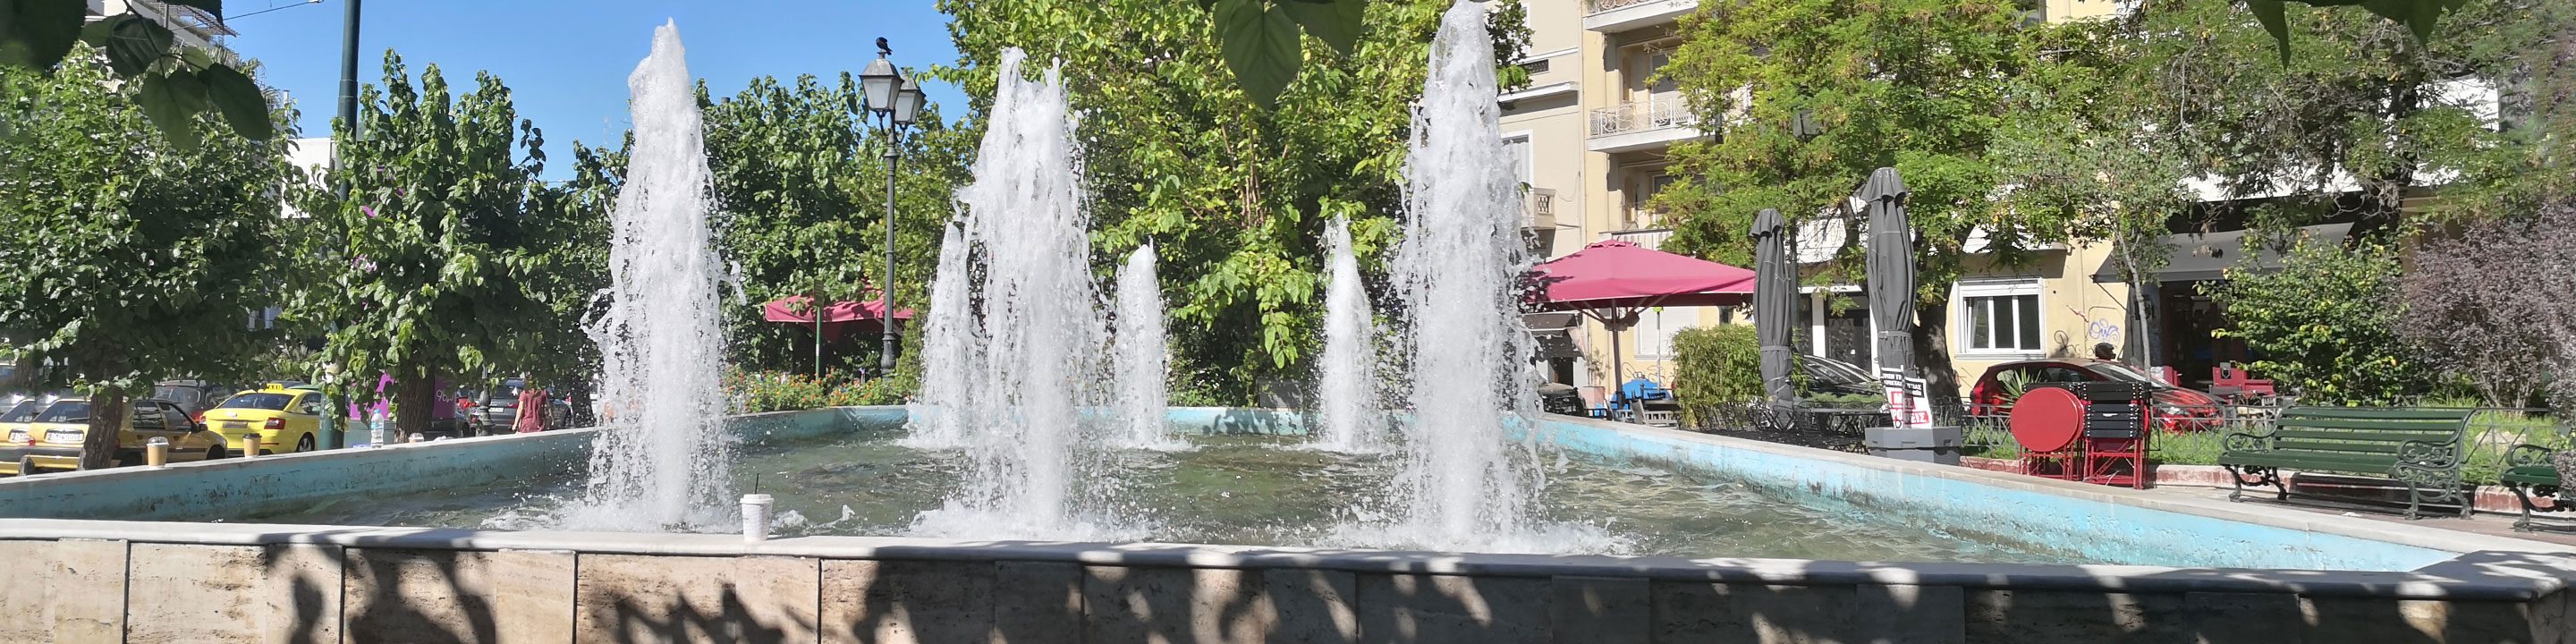 Fountain at Mavilis Square in Athens